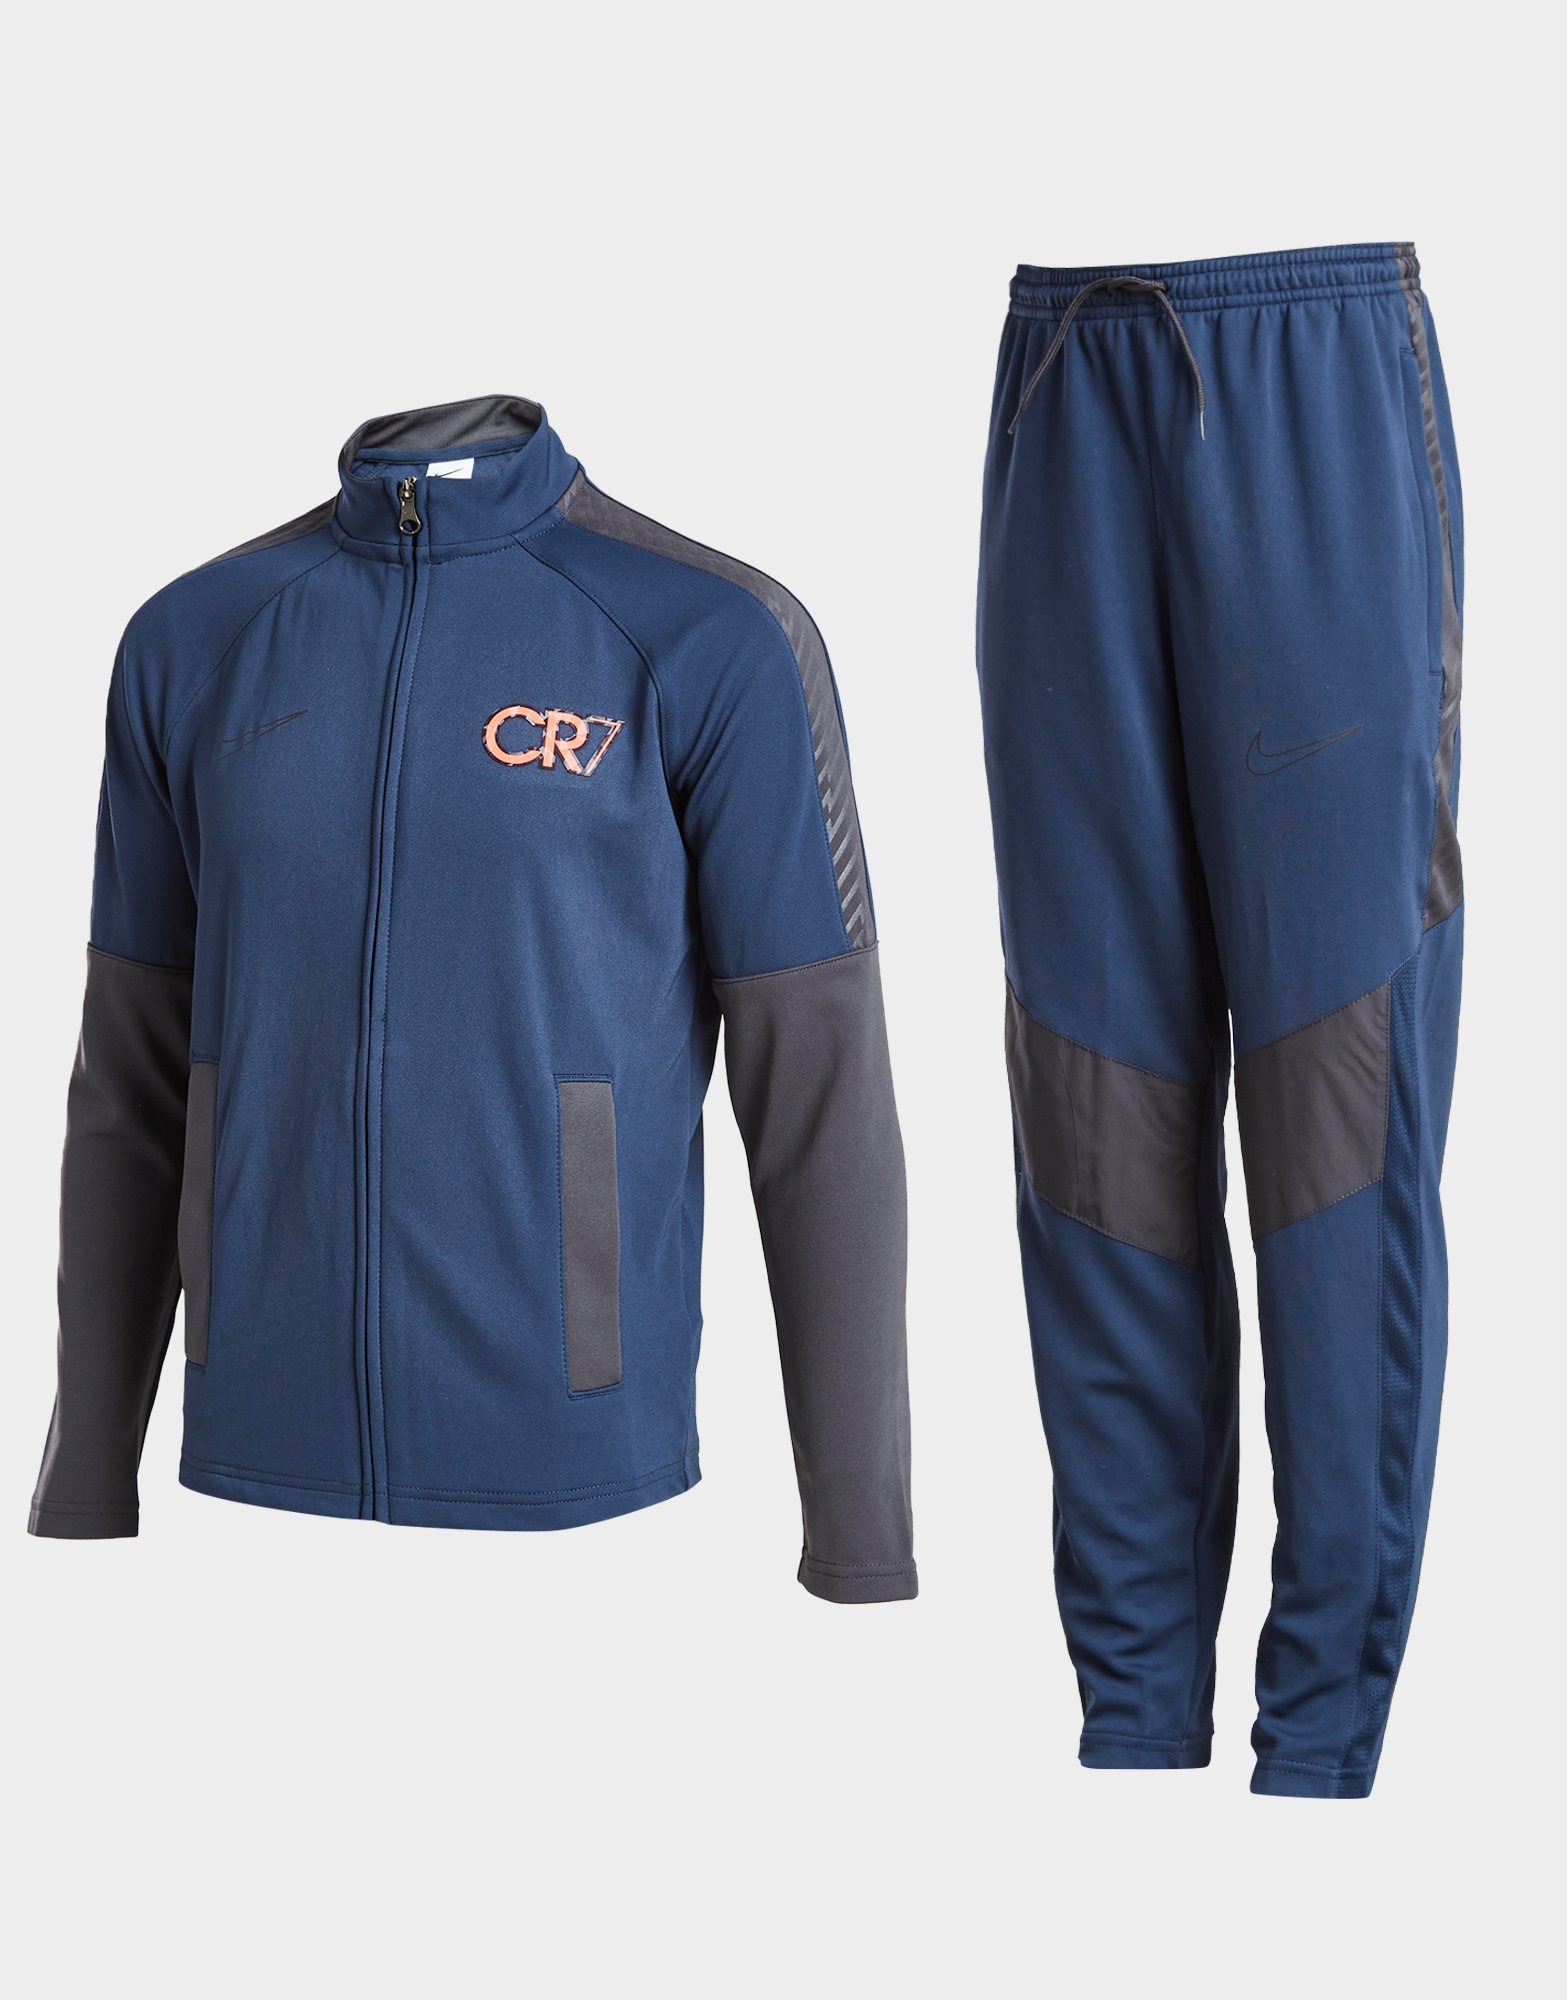 Grey Nike Cr7 Tracksuit Junior Jd Sports